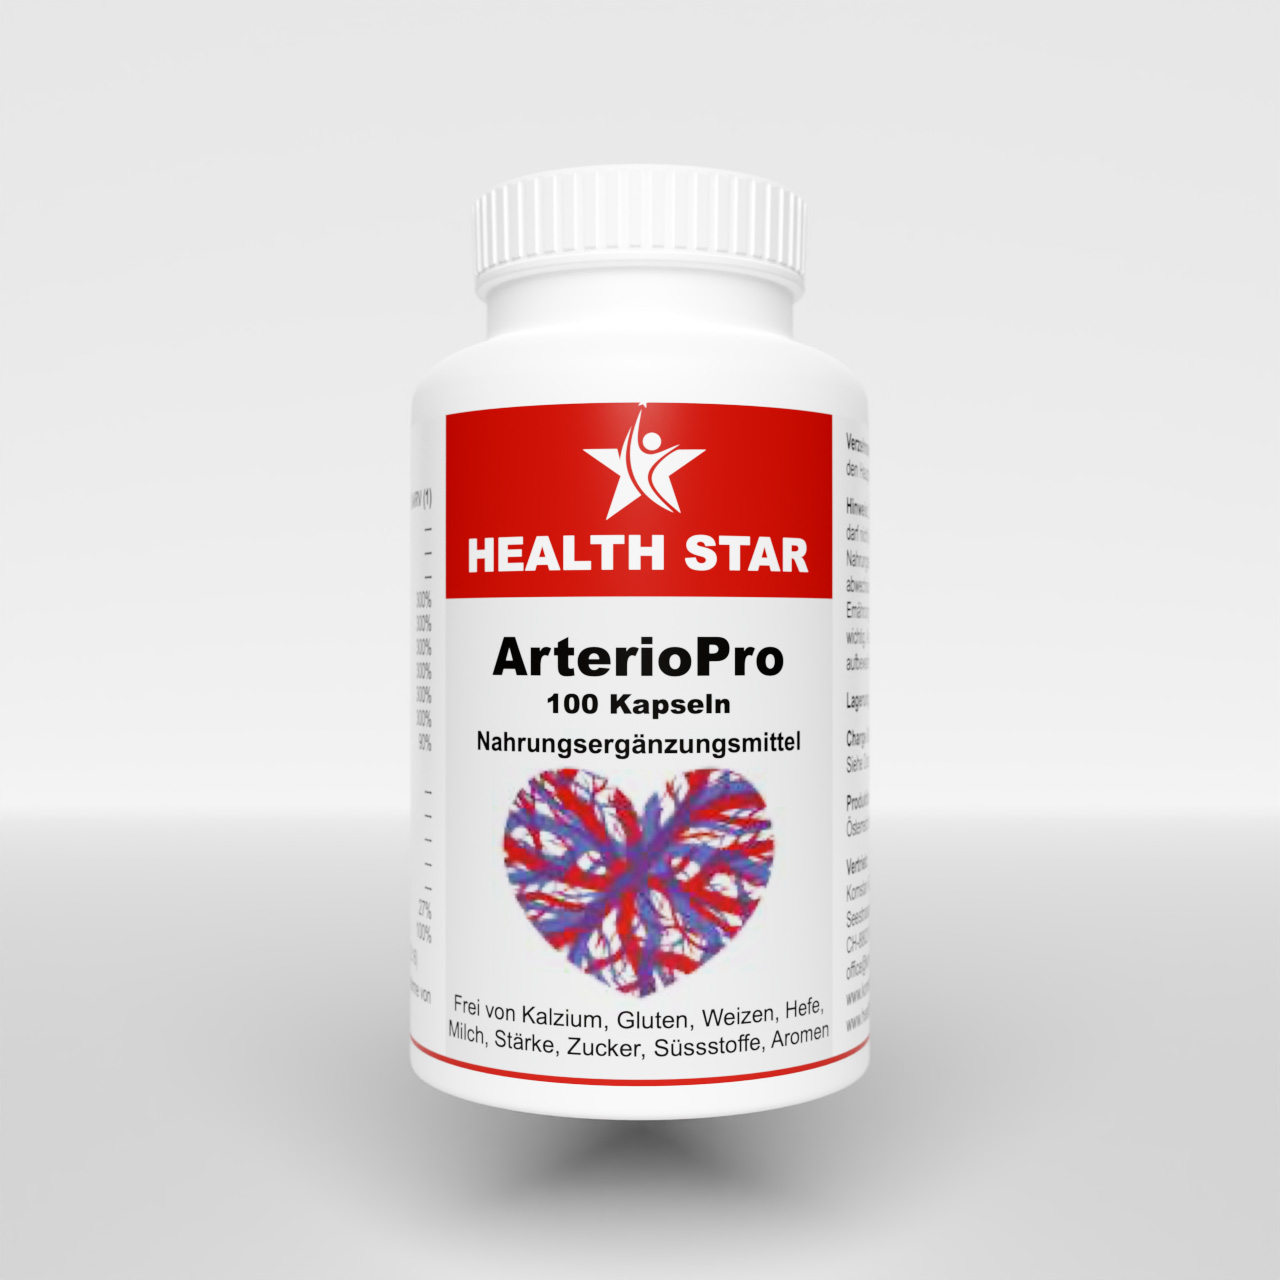 ArterioPro